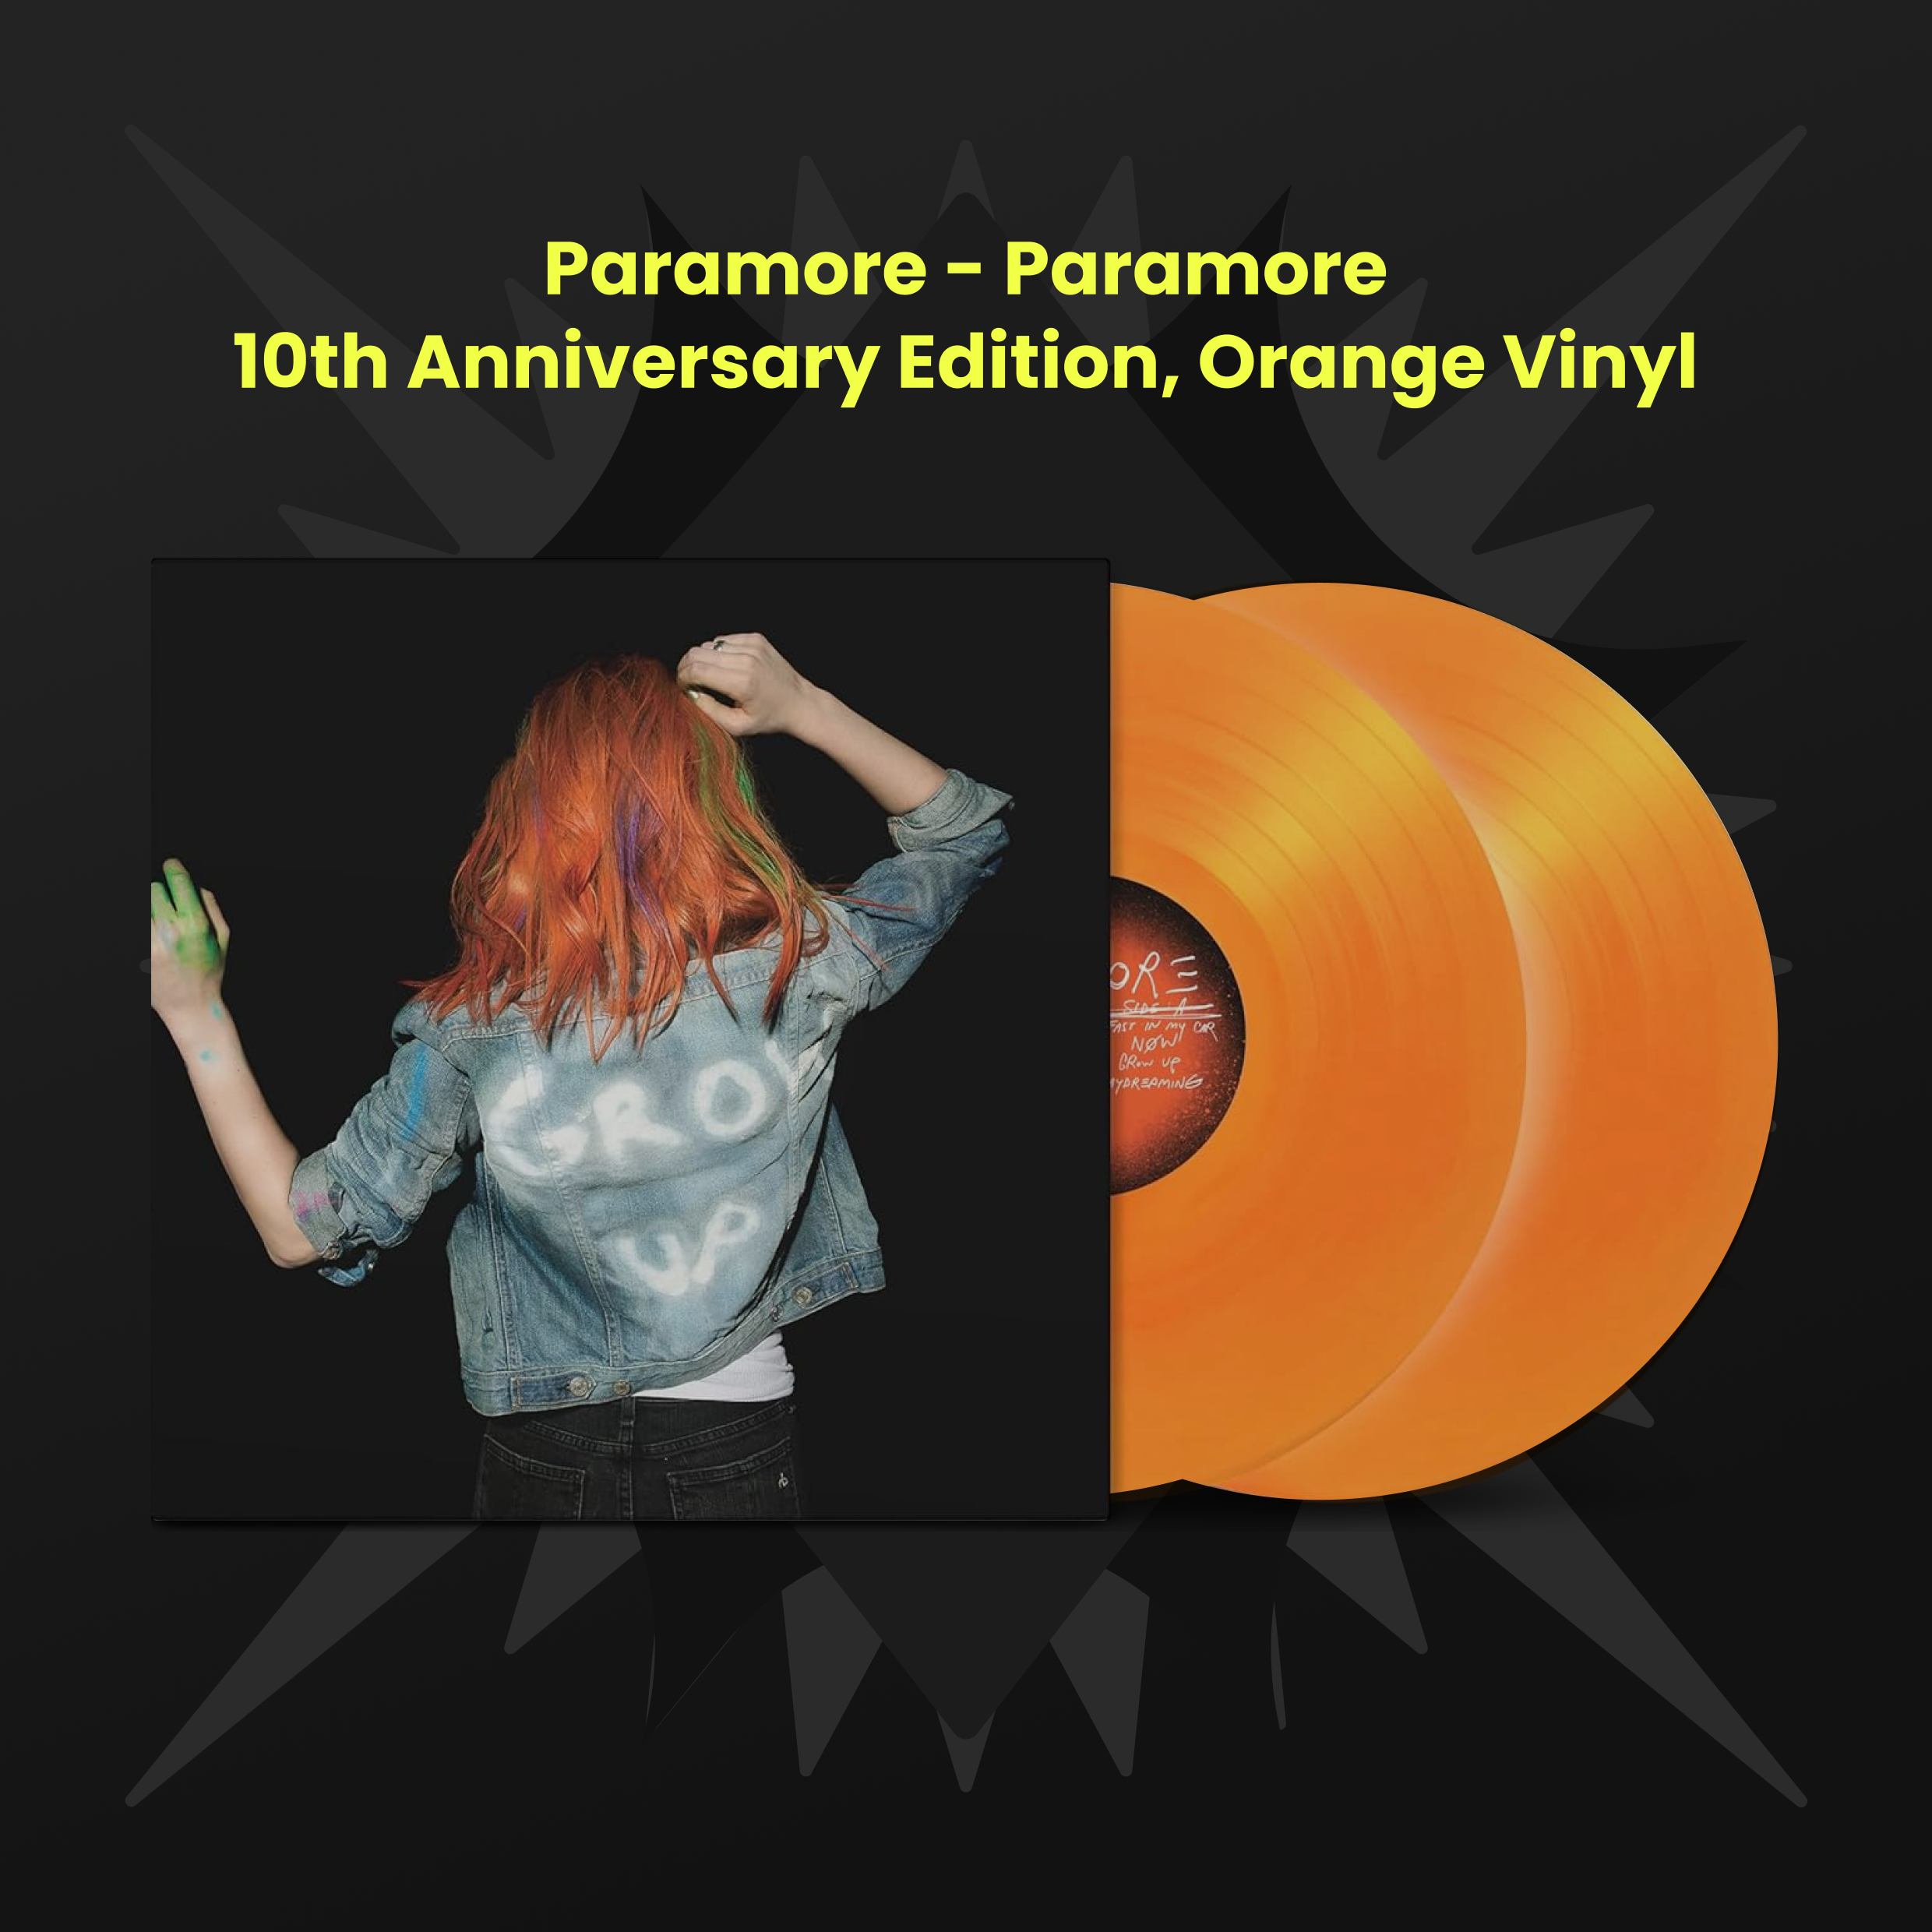 Paramore - Paramore (Vinyle orange 10e anniversaire) – High Fidelity Vinyl